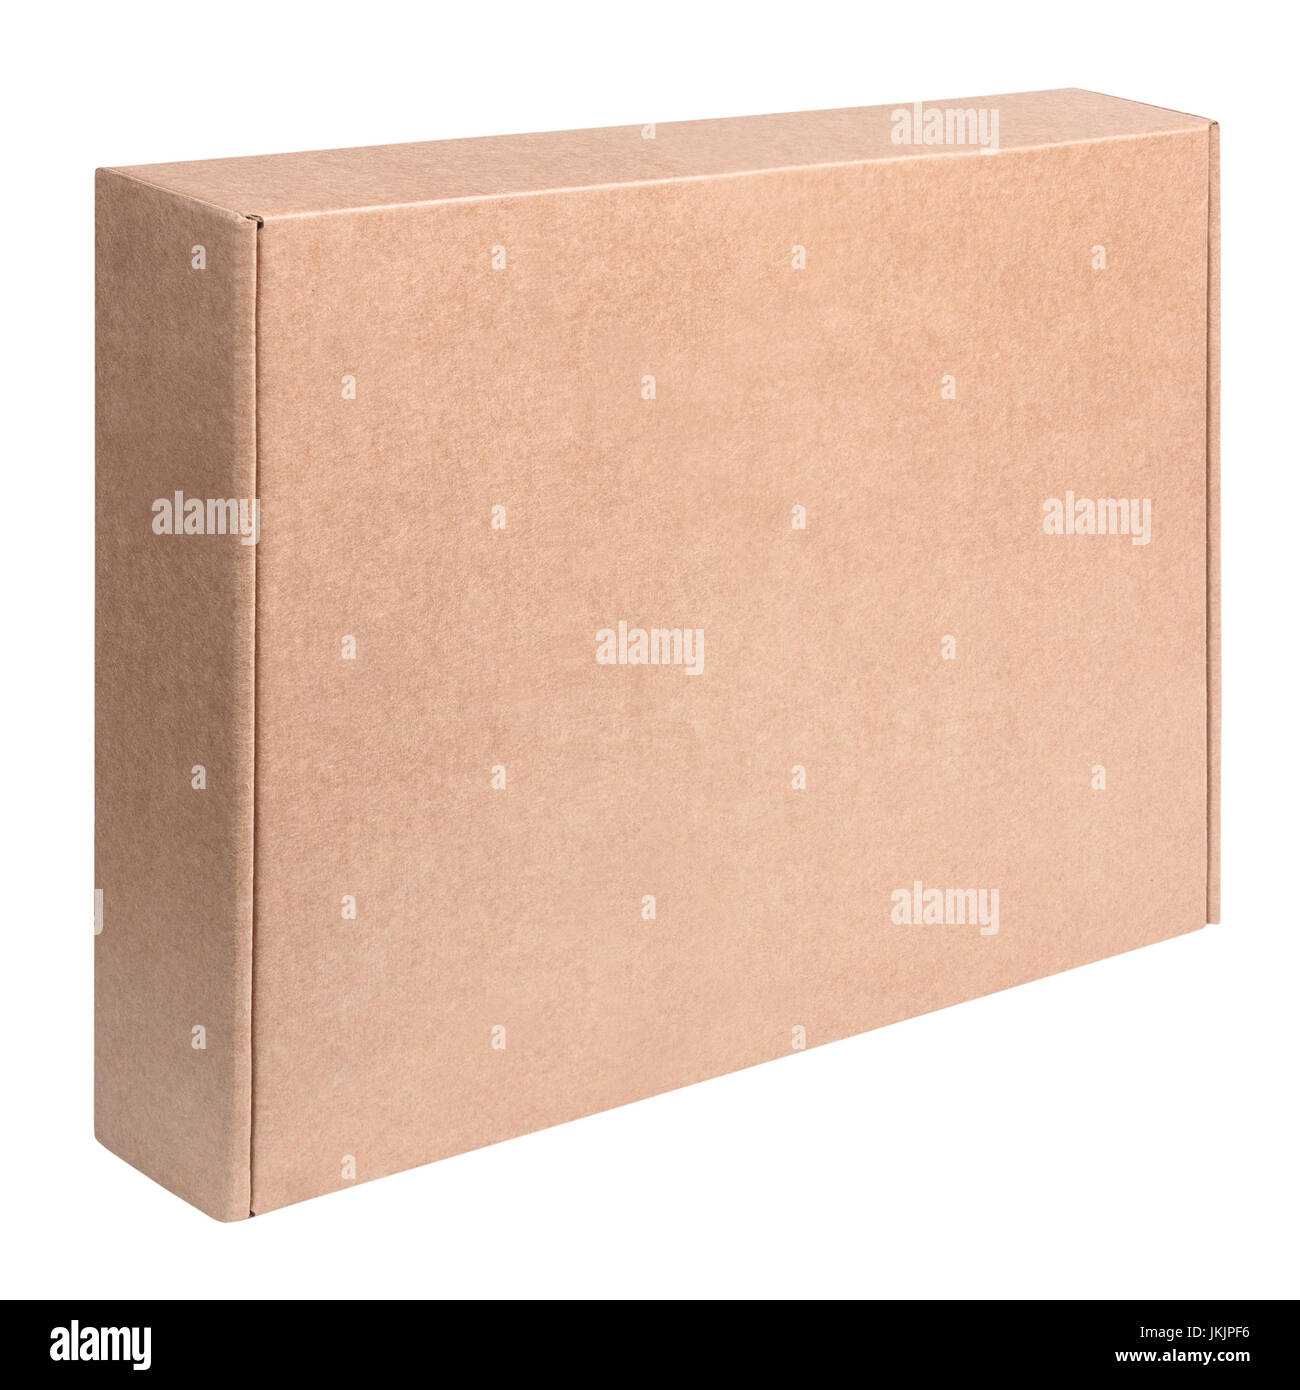 Cardboard kraft box Stock Photo